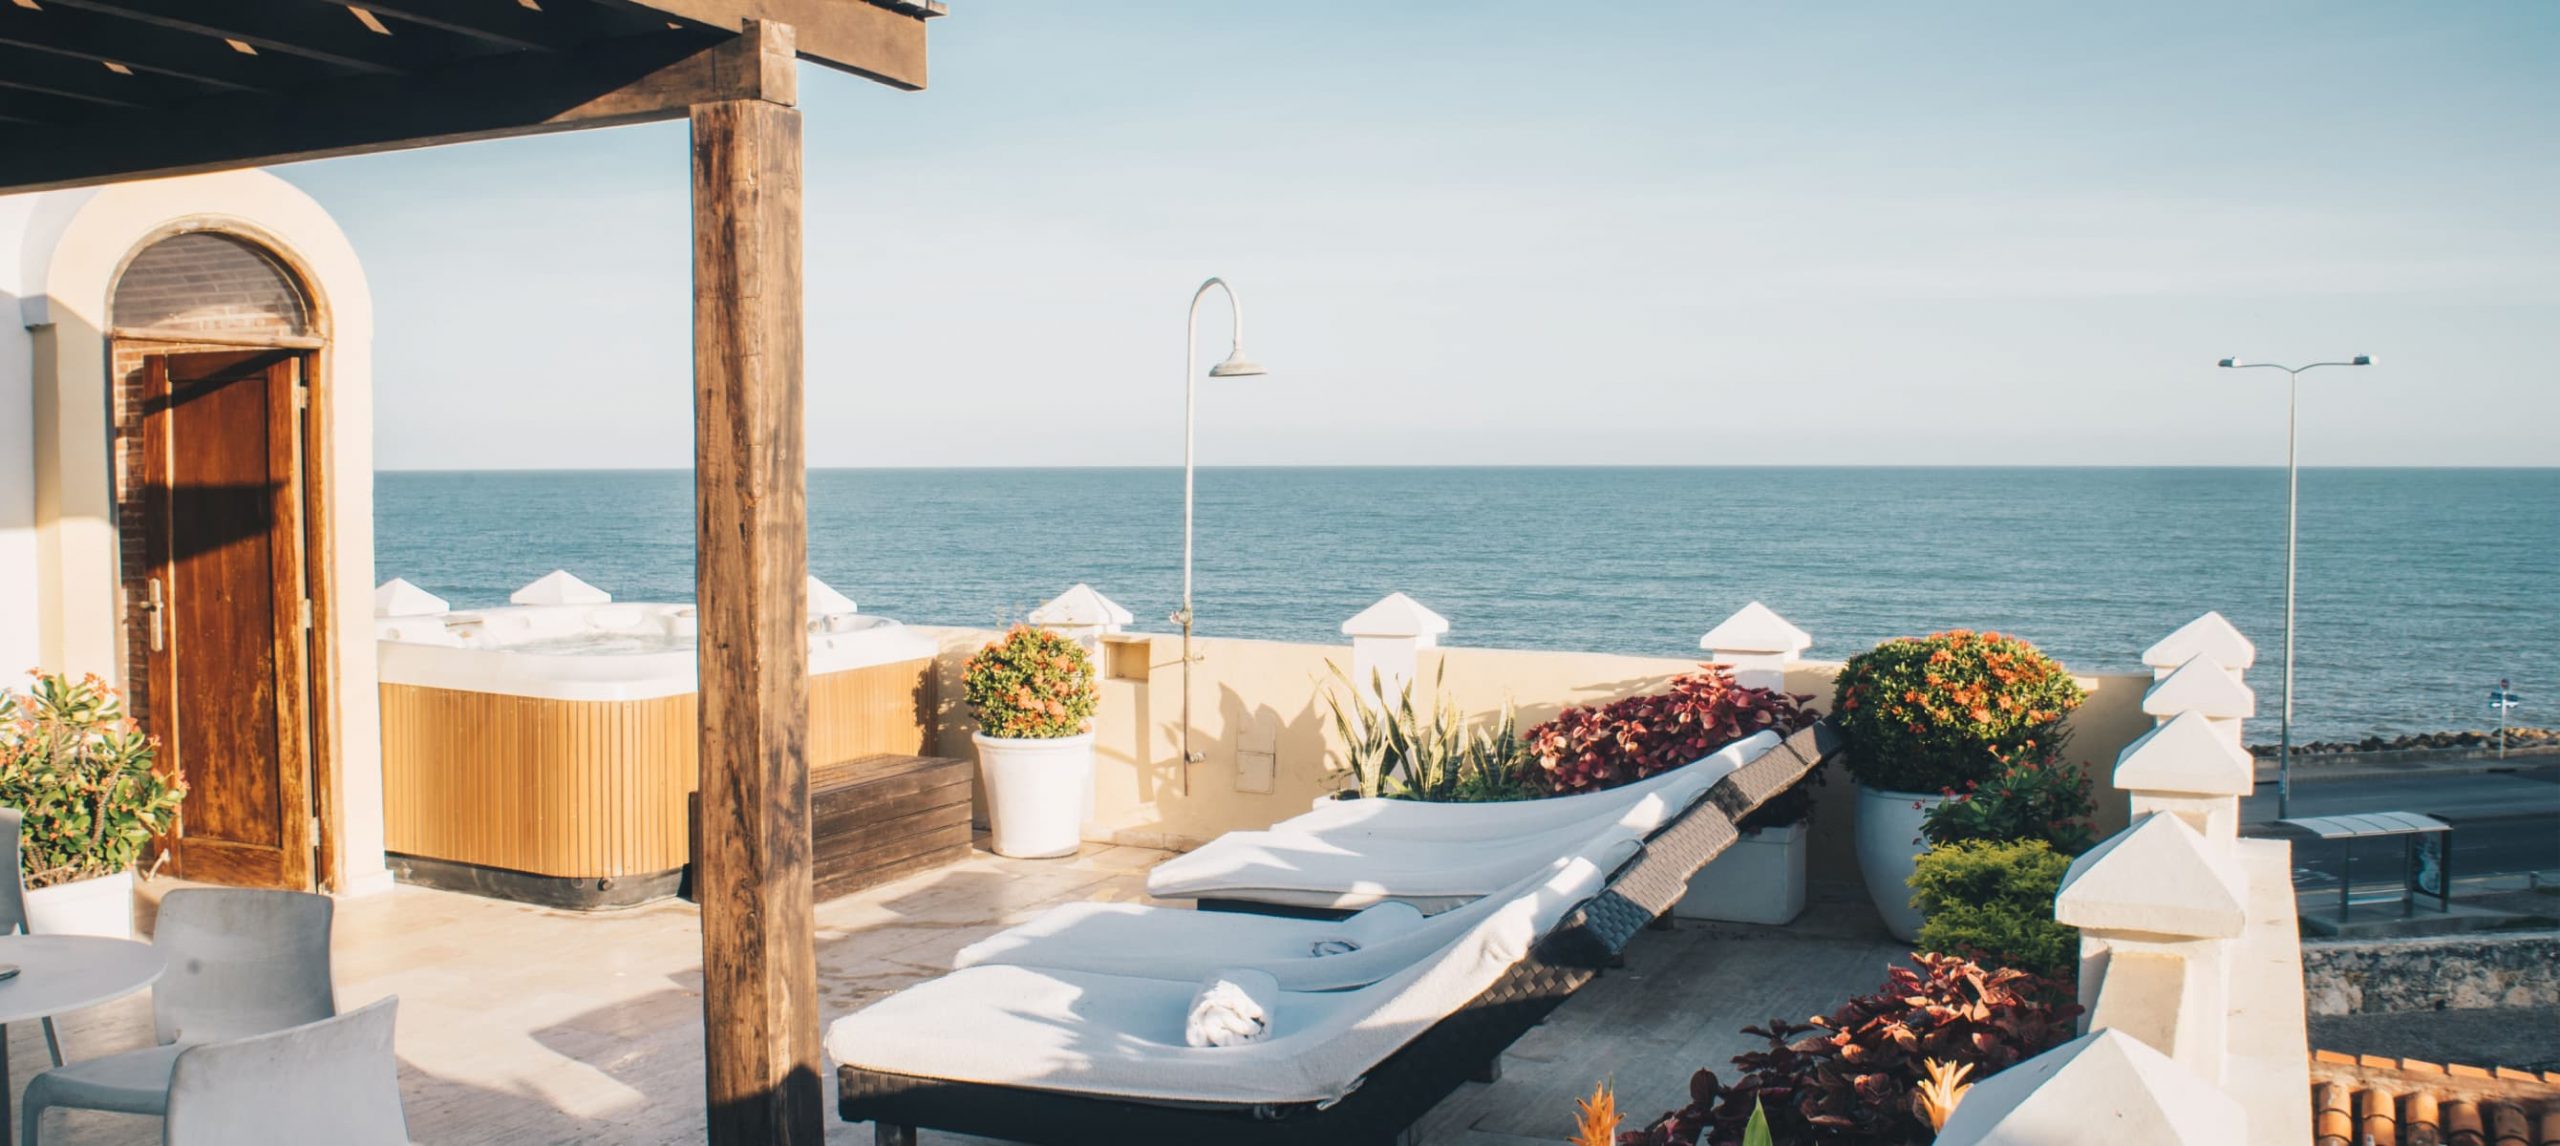 The 5 Best San Diego Beach Hotels